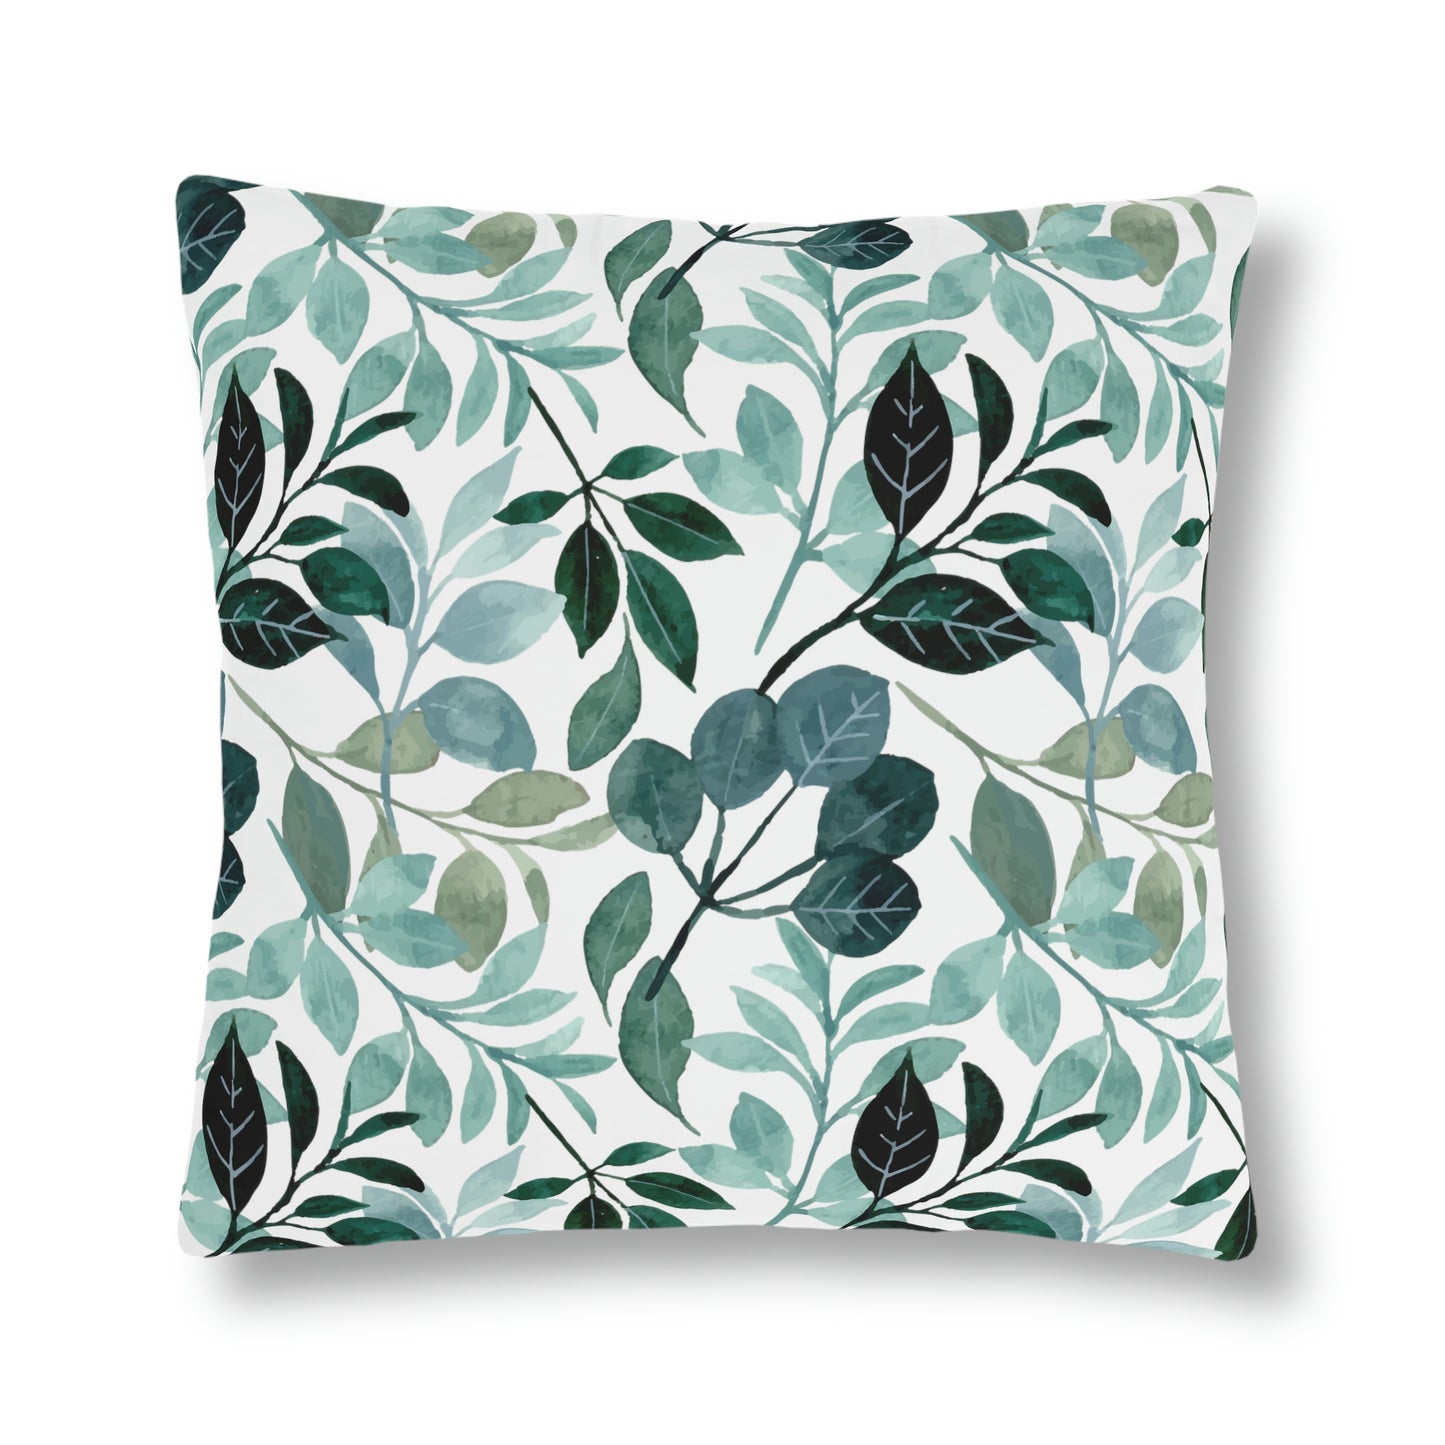 Floral Pillow / Teal Outdoor Waterproof Pillow / Leaf Print Pillow